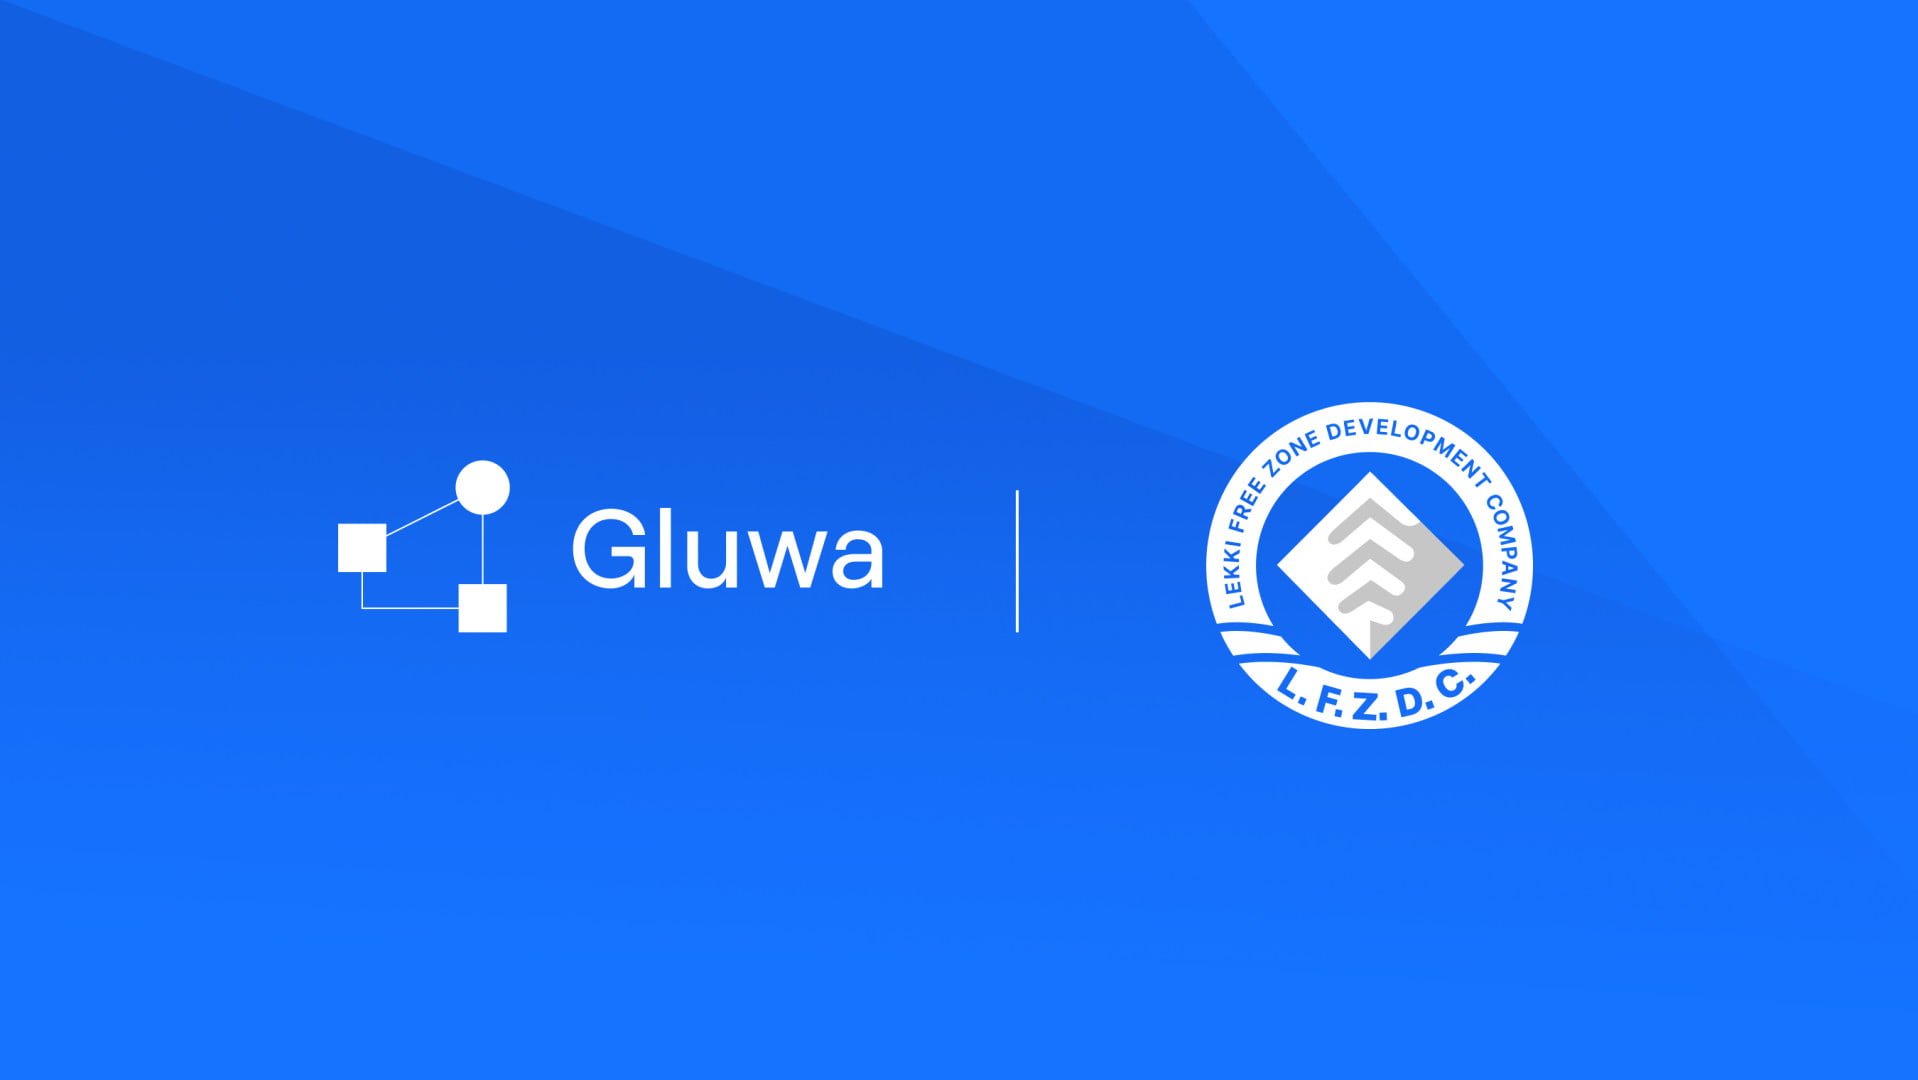 Lekki Free Zone Set to Partner Gluwa On Blockchain Technology 2